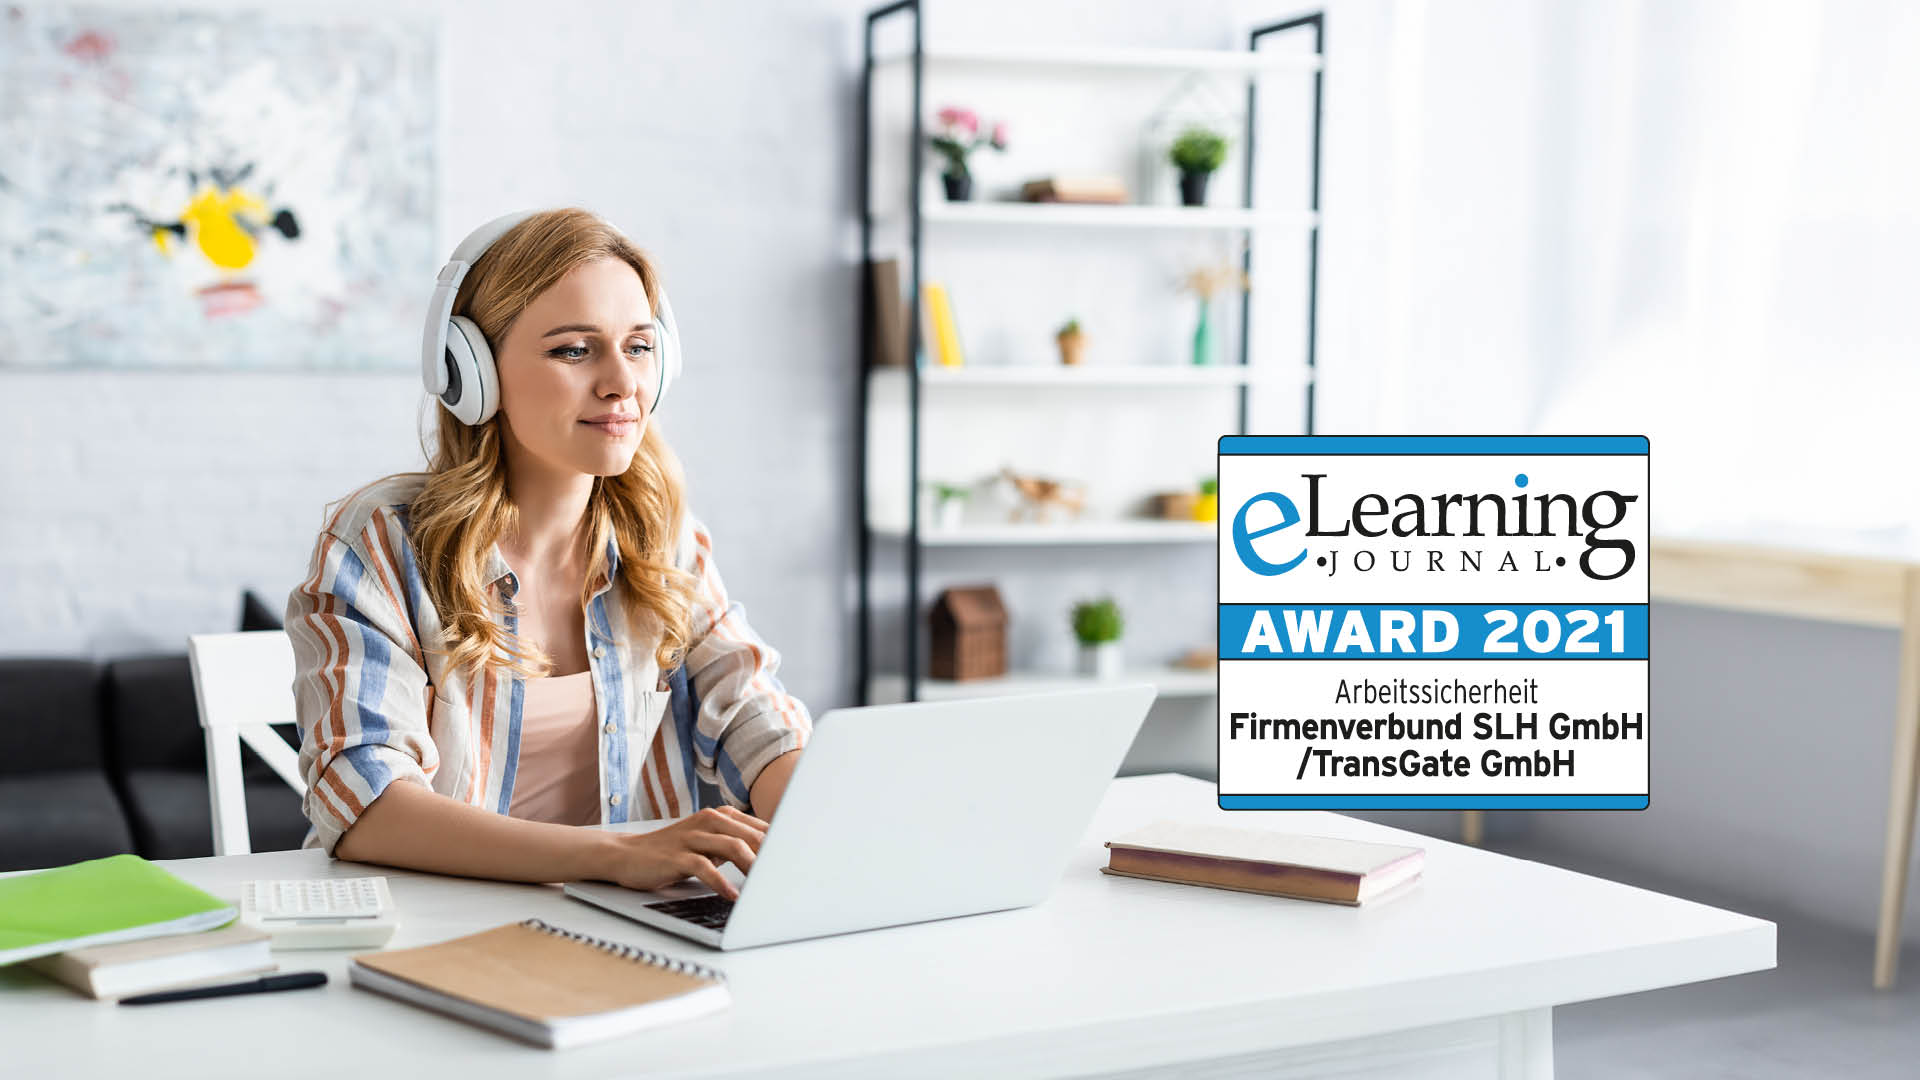 eLearning Award 2021